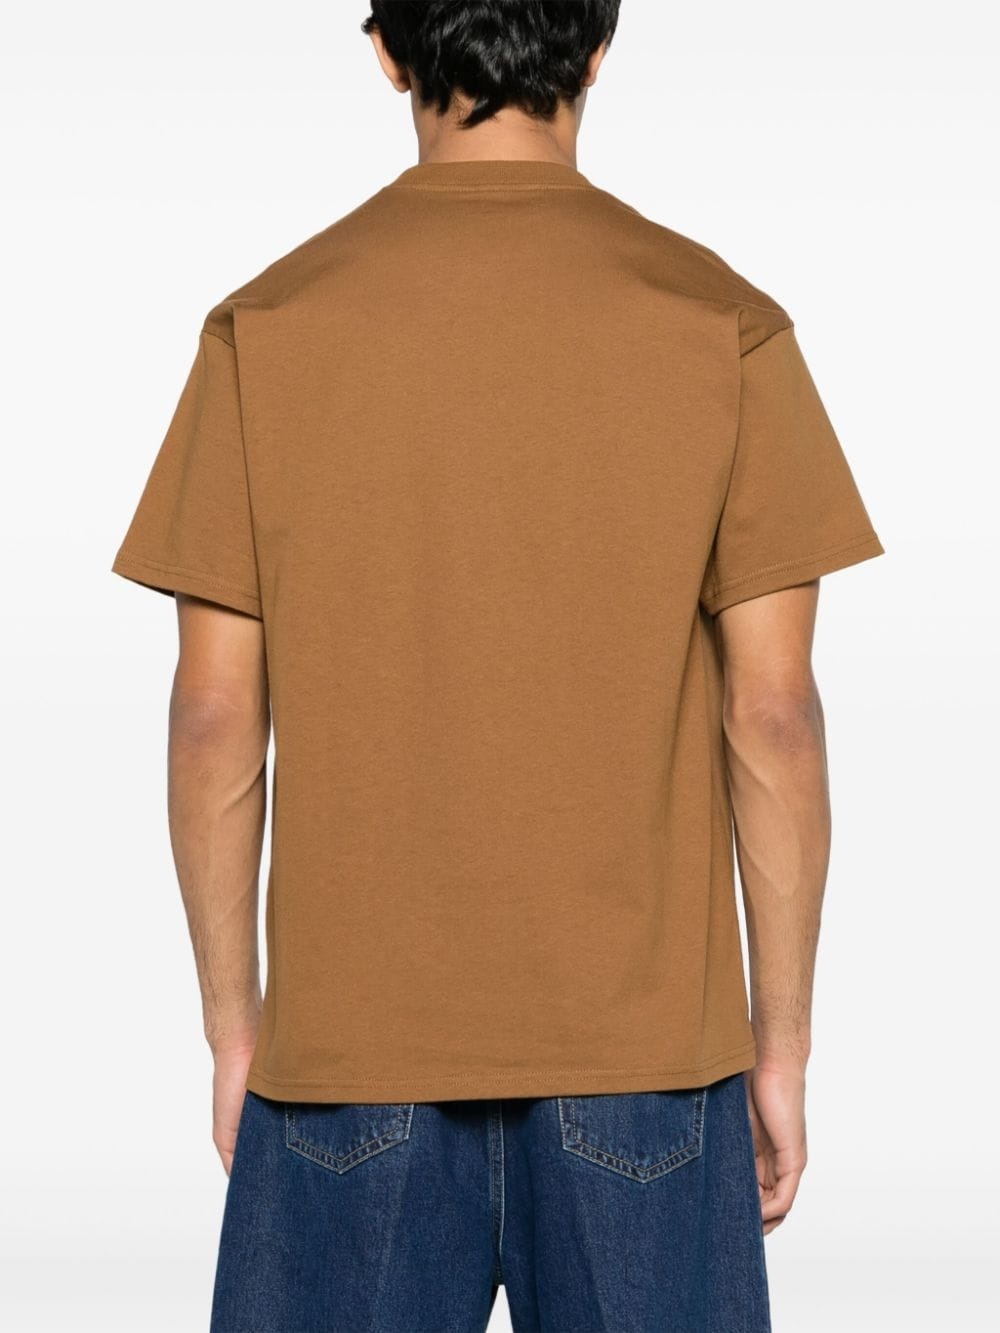 Carhartt T-shirt Marrone Uomo - 5